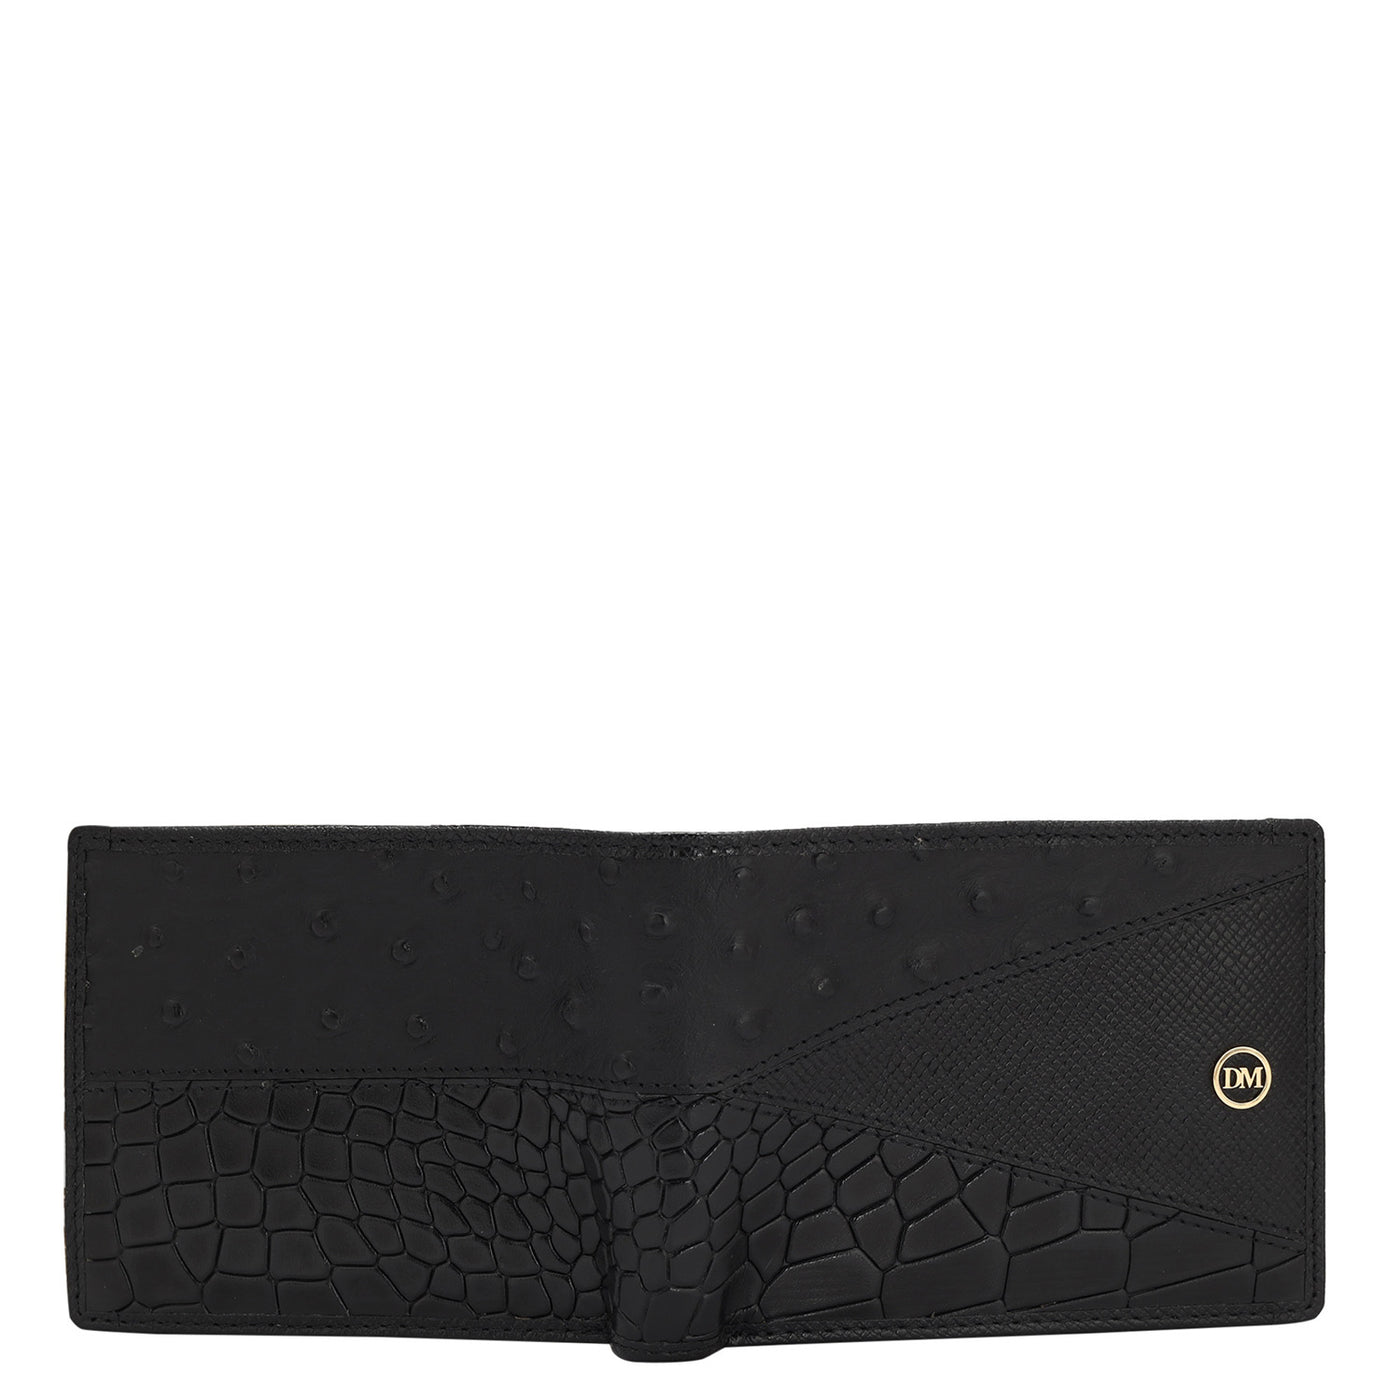 Croco Ostrich Leather Mens Wallet - Black